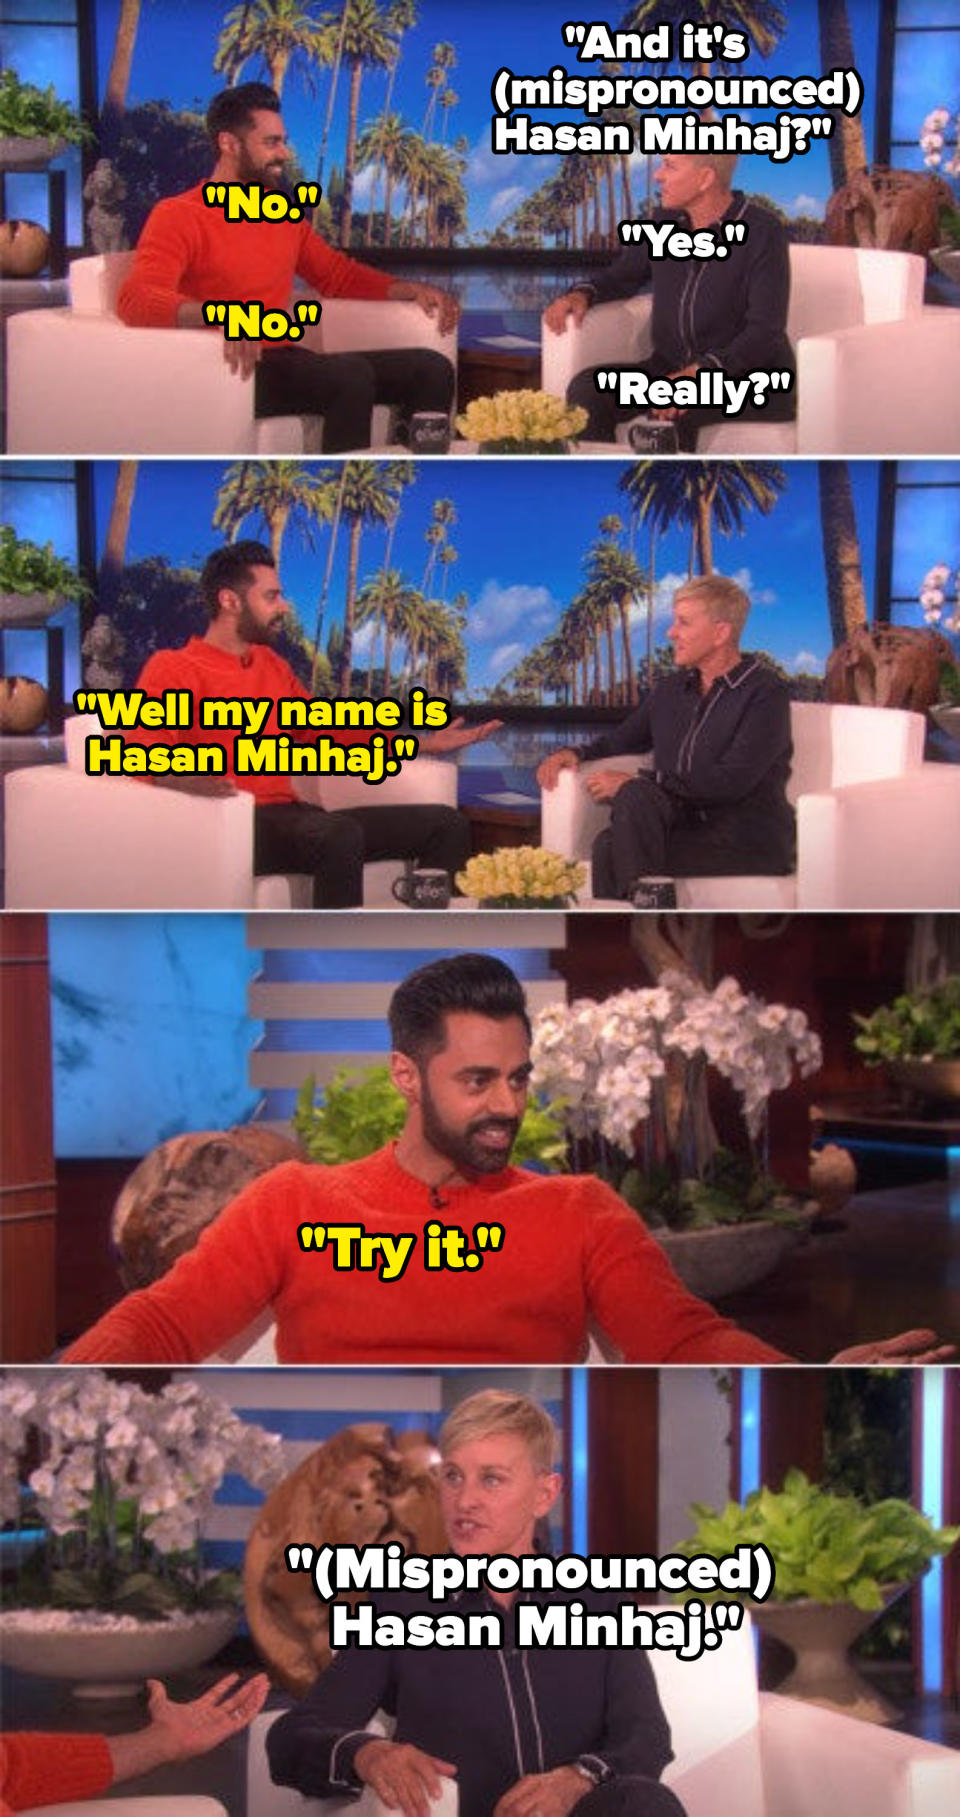 Ellen purposely mispronouncing Hasan's name for laughs